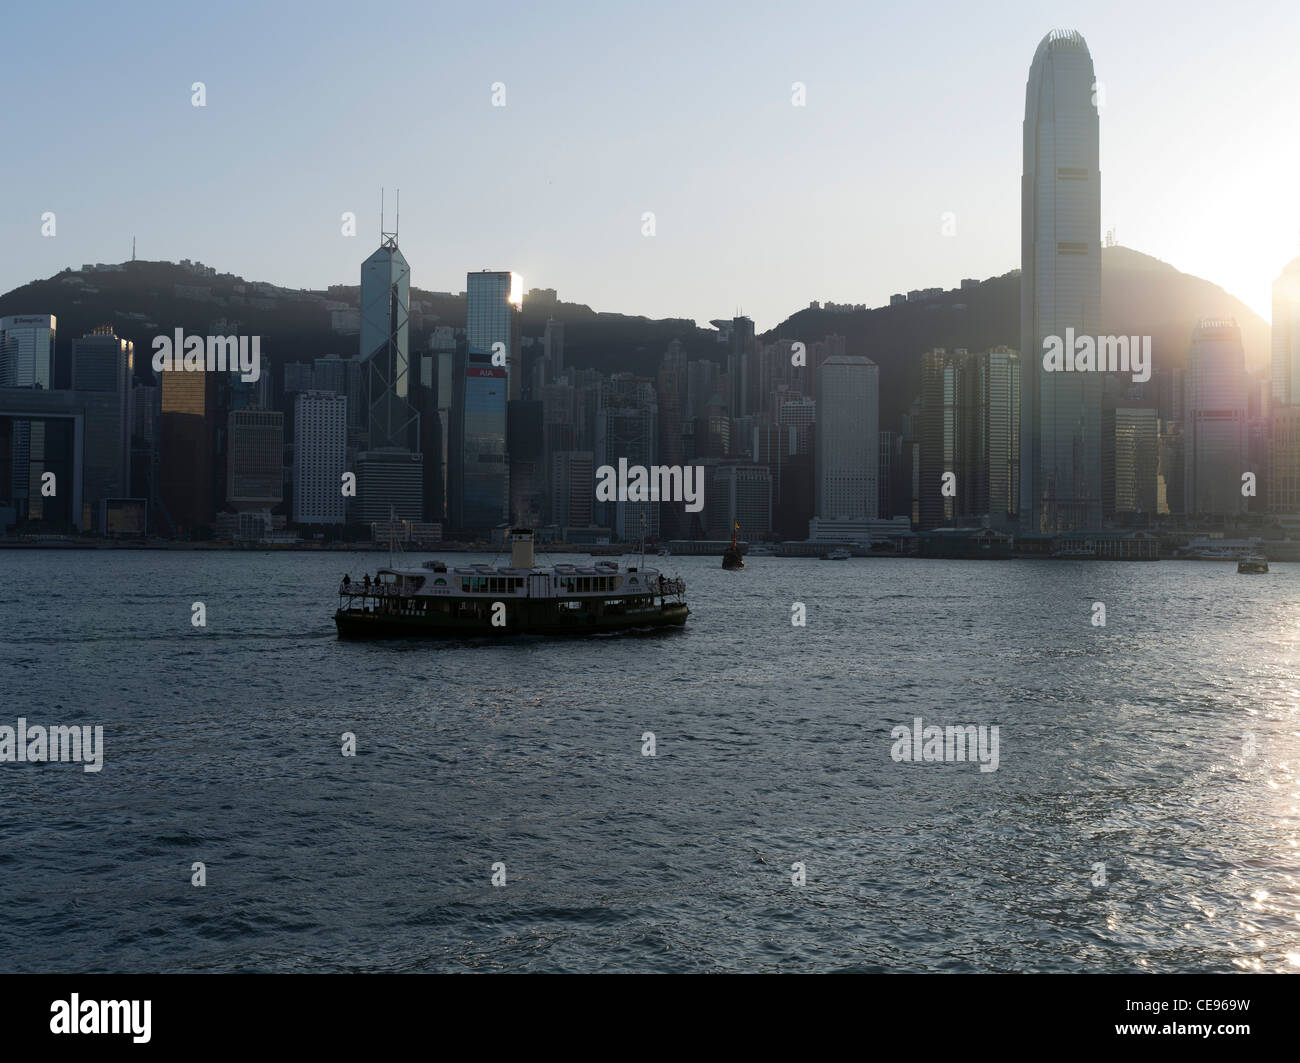 Dh PORTO DI HONG KONG HONG KONG Star Ferry Shing Star gite turistiche dell'isola di Hong Kong edifici sul lungomare Foto Stock